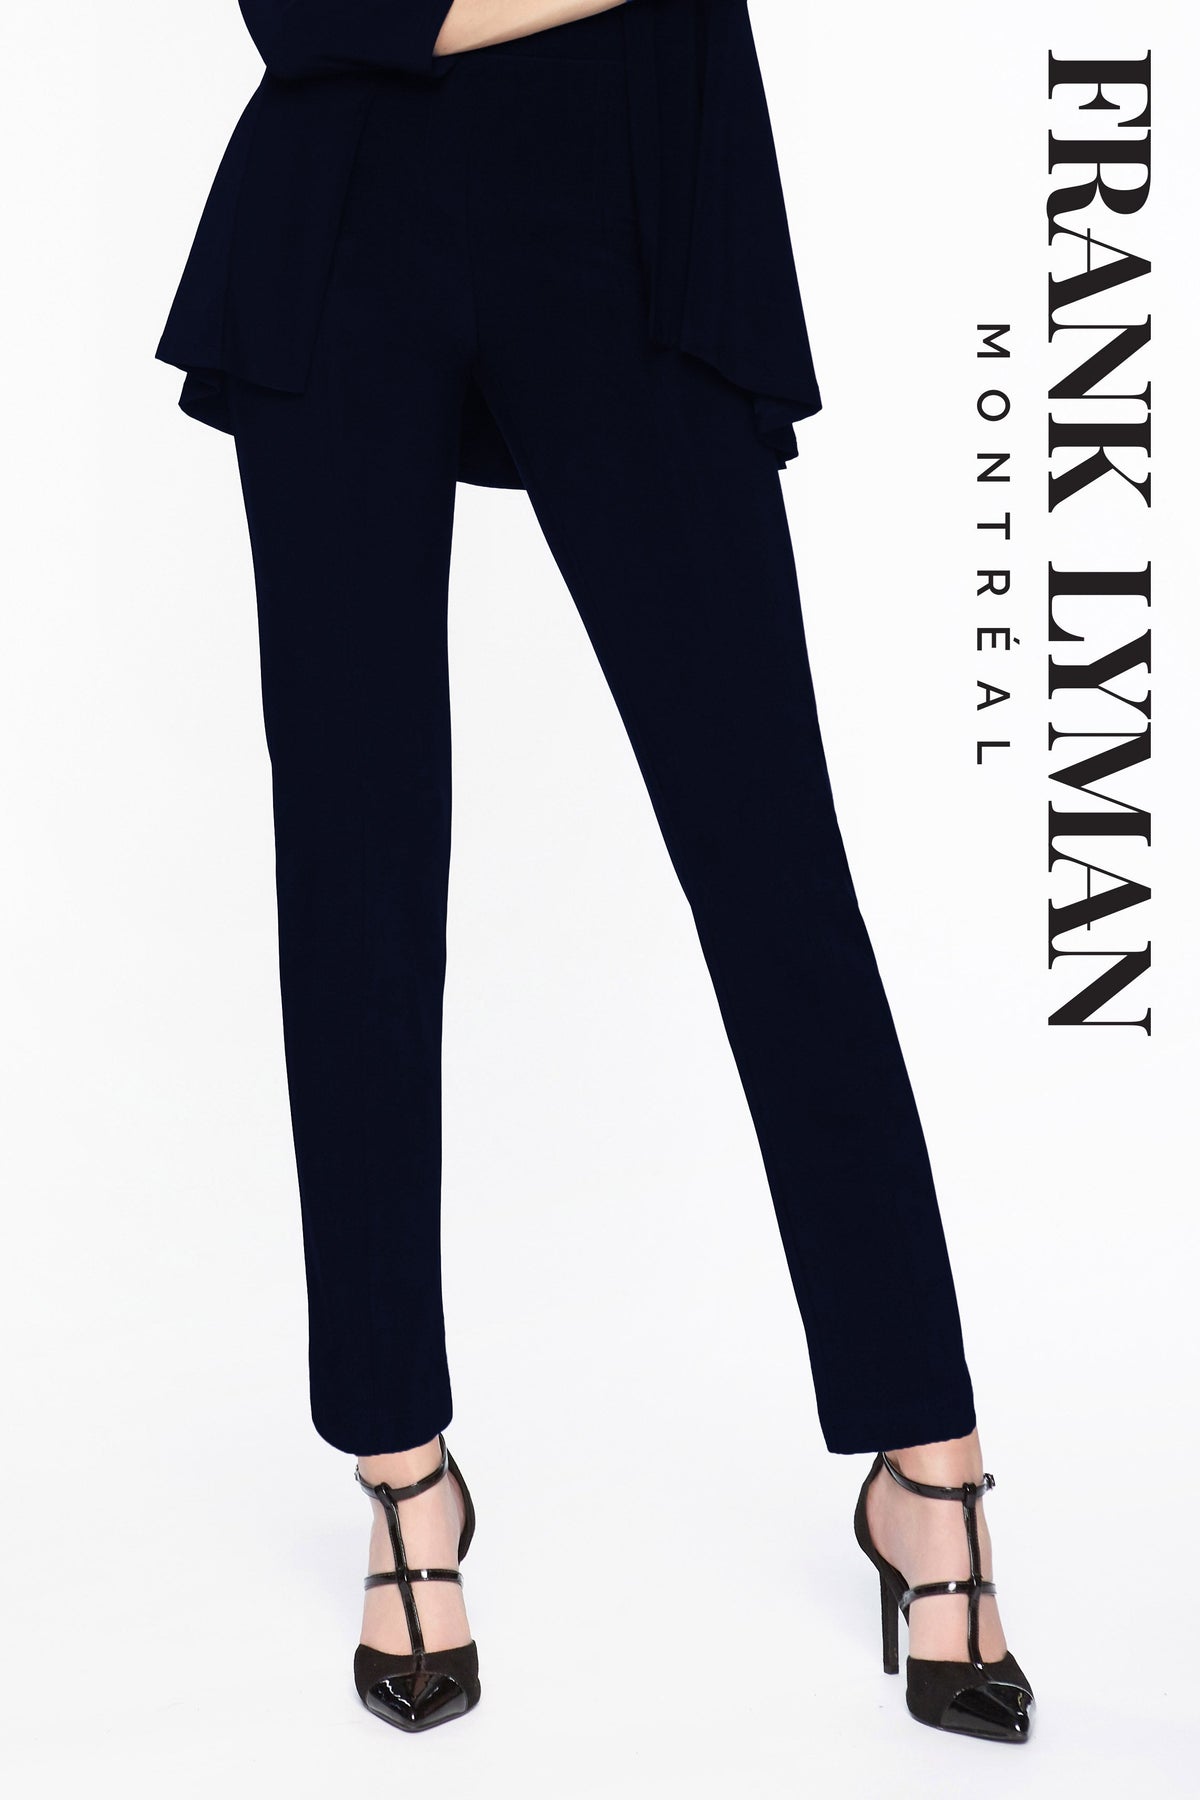 Pantalon en Knit Frank Lyman - 017